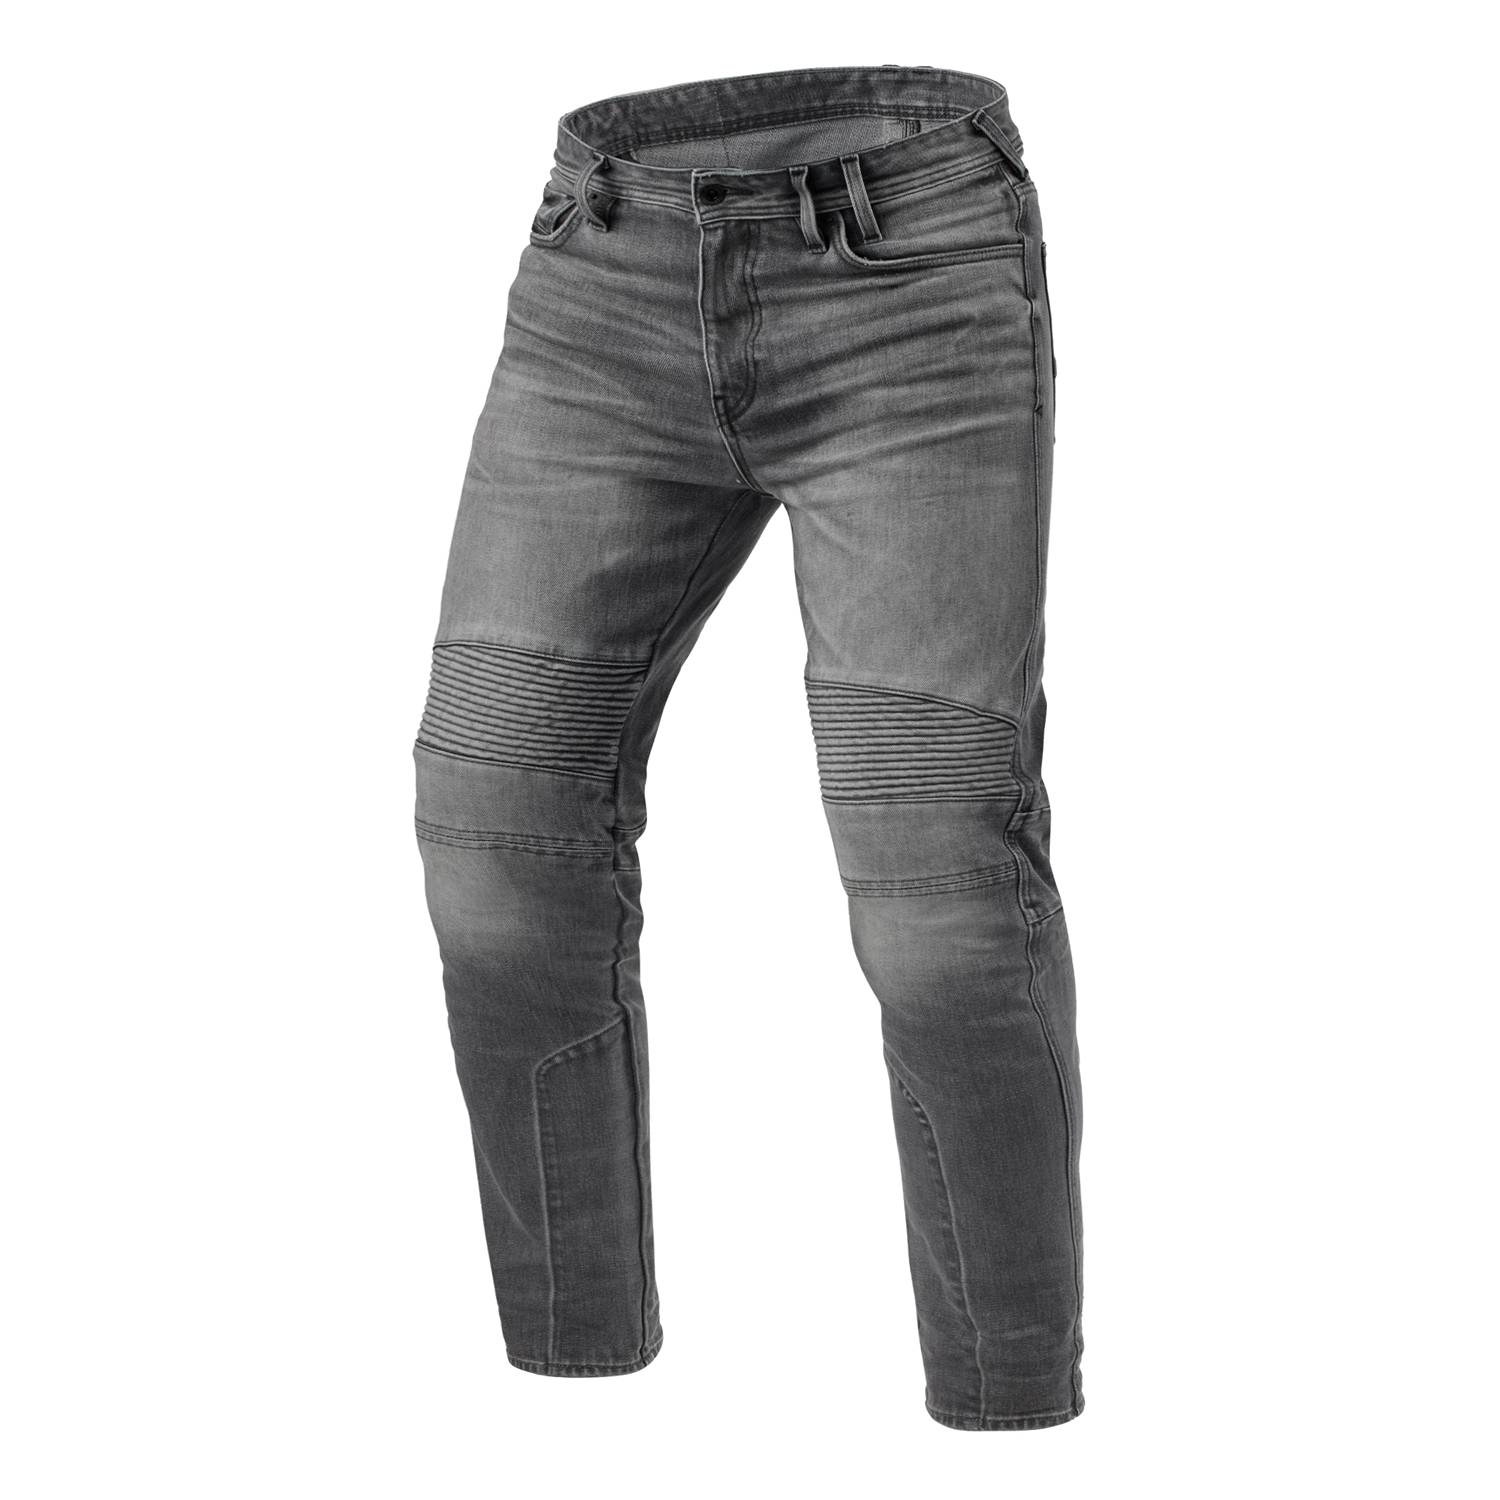 Image of REV'IT! Jeans Moto 2 TF Medium Grey Used L34 Motorcycle Jeans Größe L34/W30